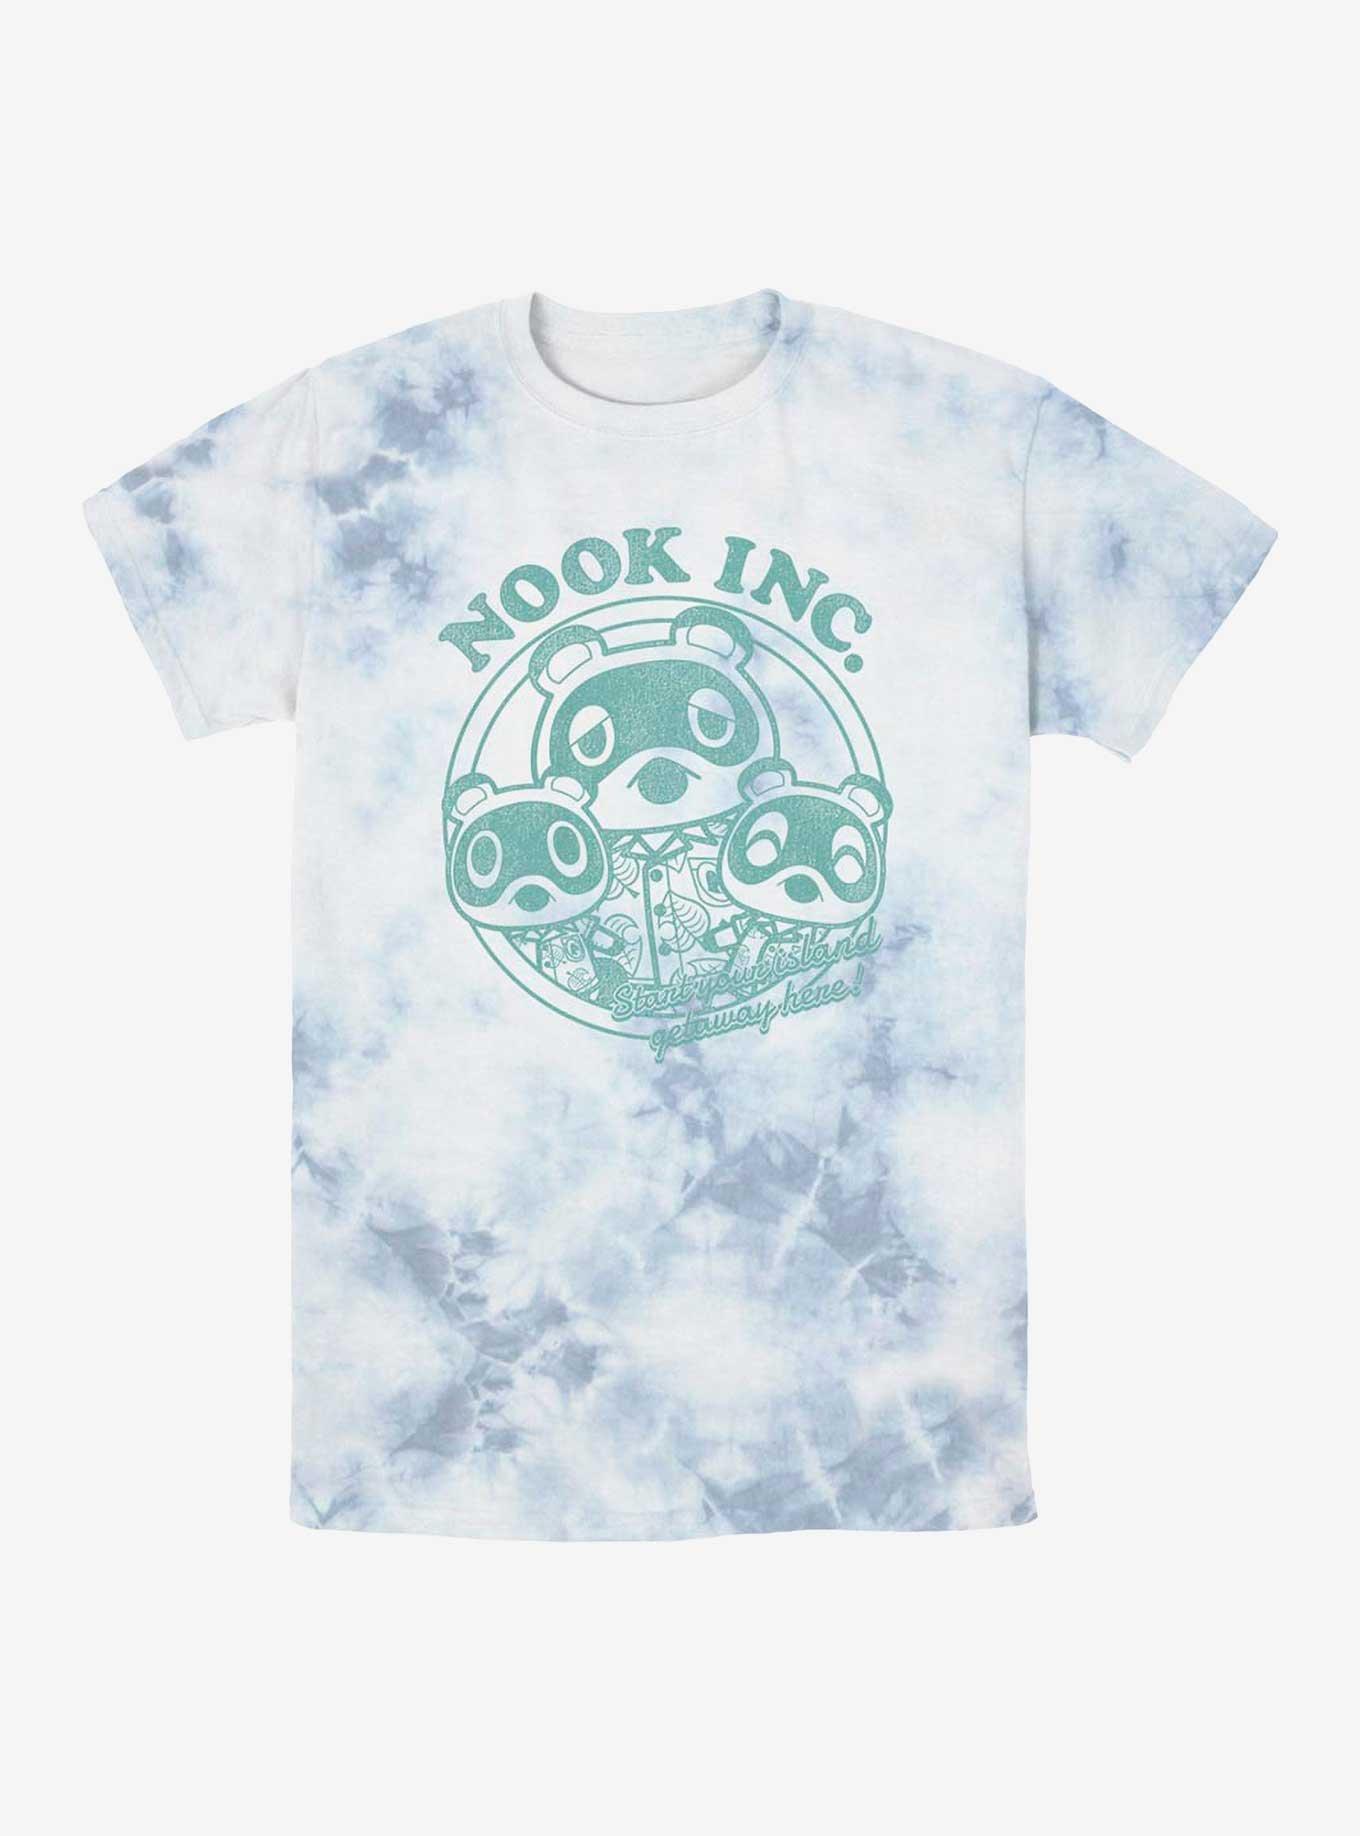 Nintendo Nook Inc. Getaway Tie-Dye T-Shirt, WHITEBLUE, hi-res